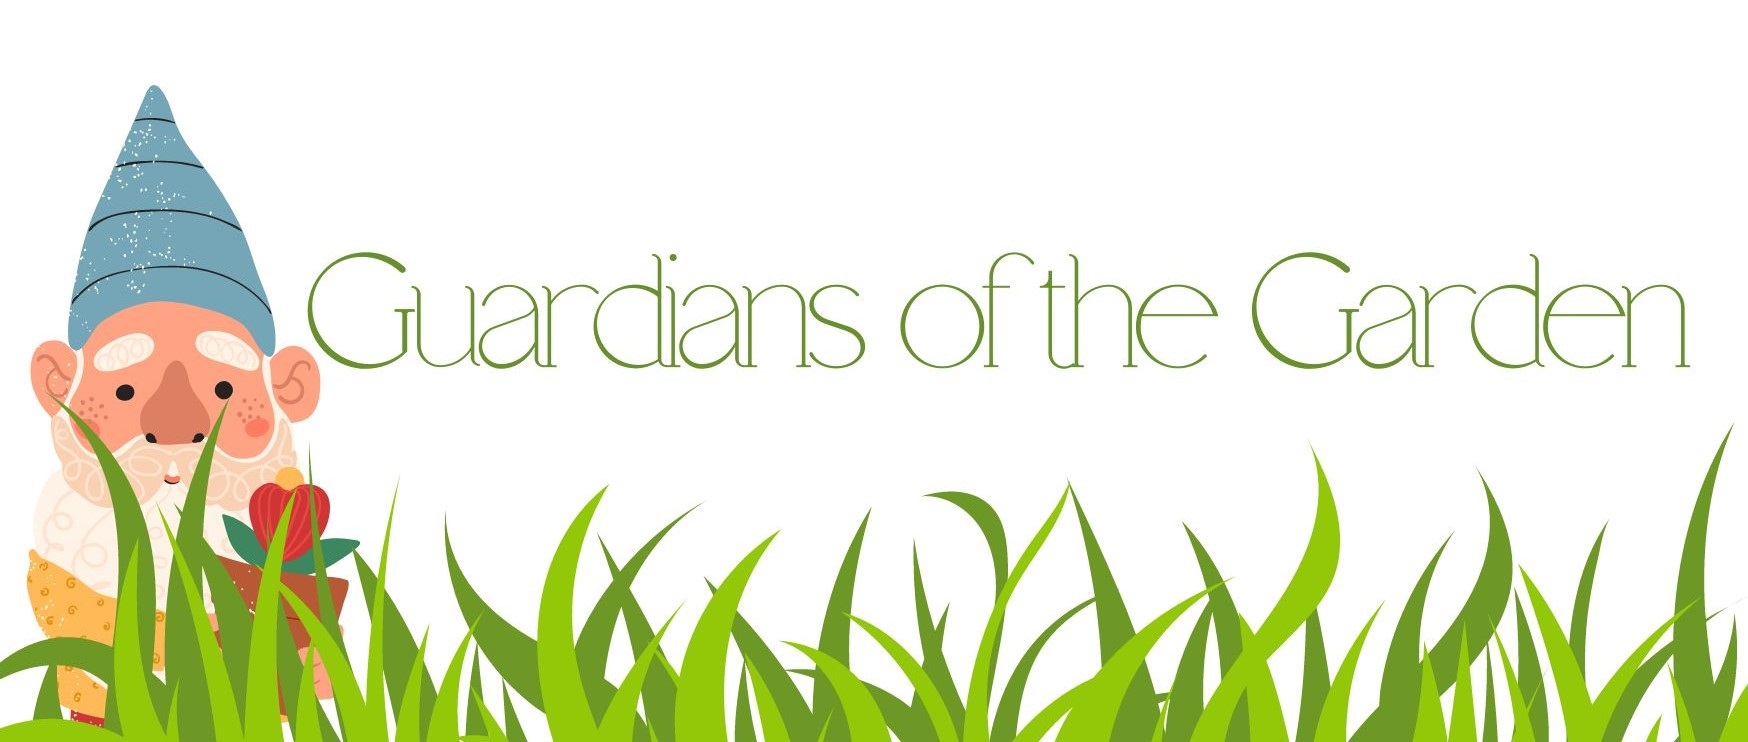 Banner-Guardians-of-the-garden.jpg